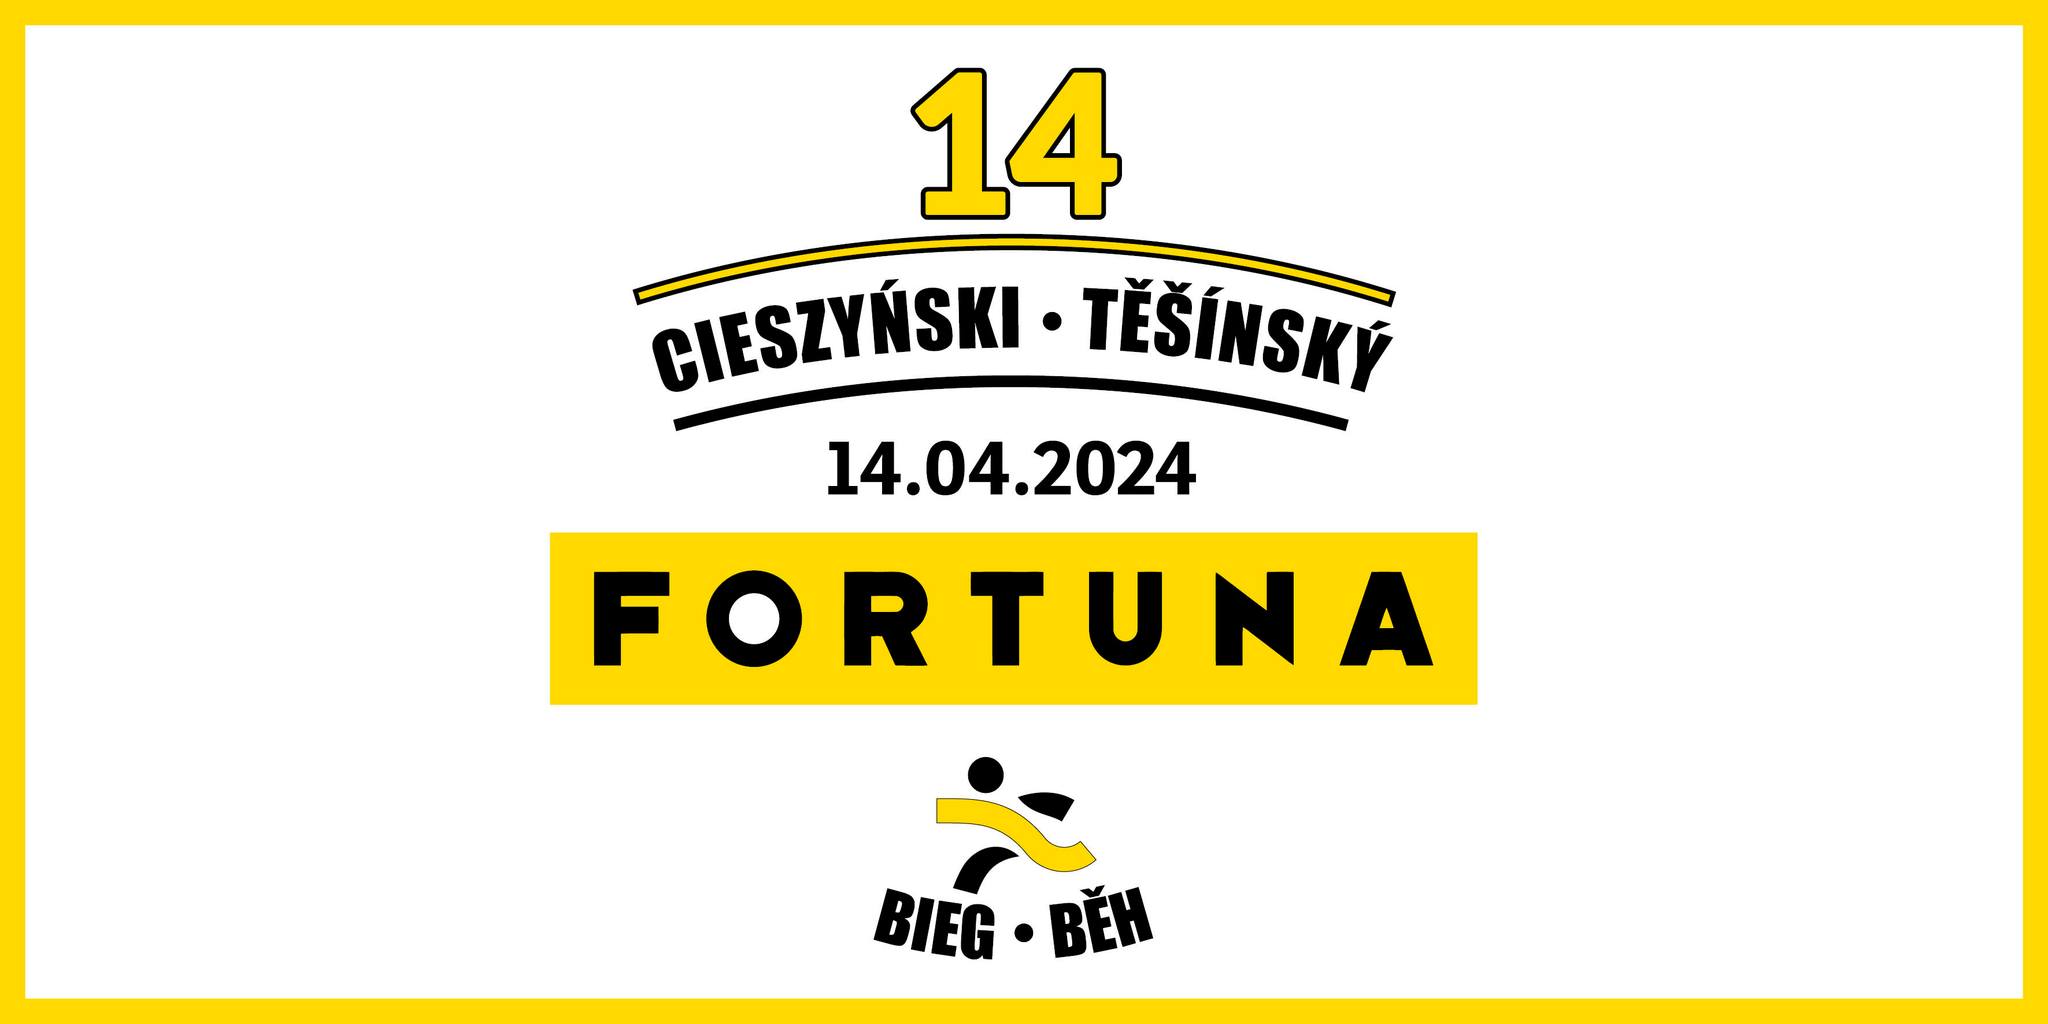 logo Fortuna Bieg